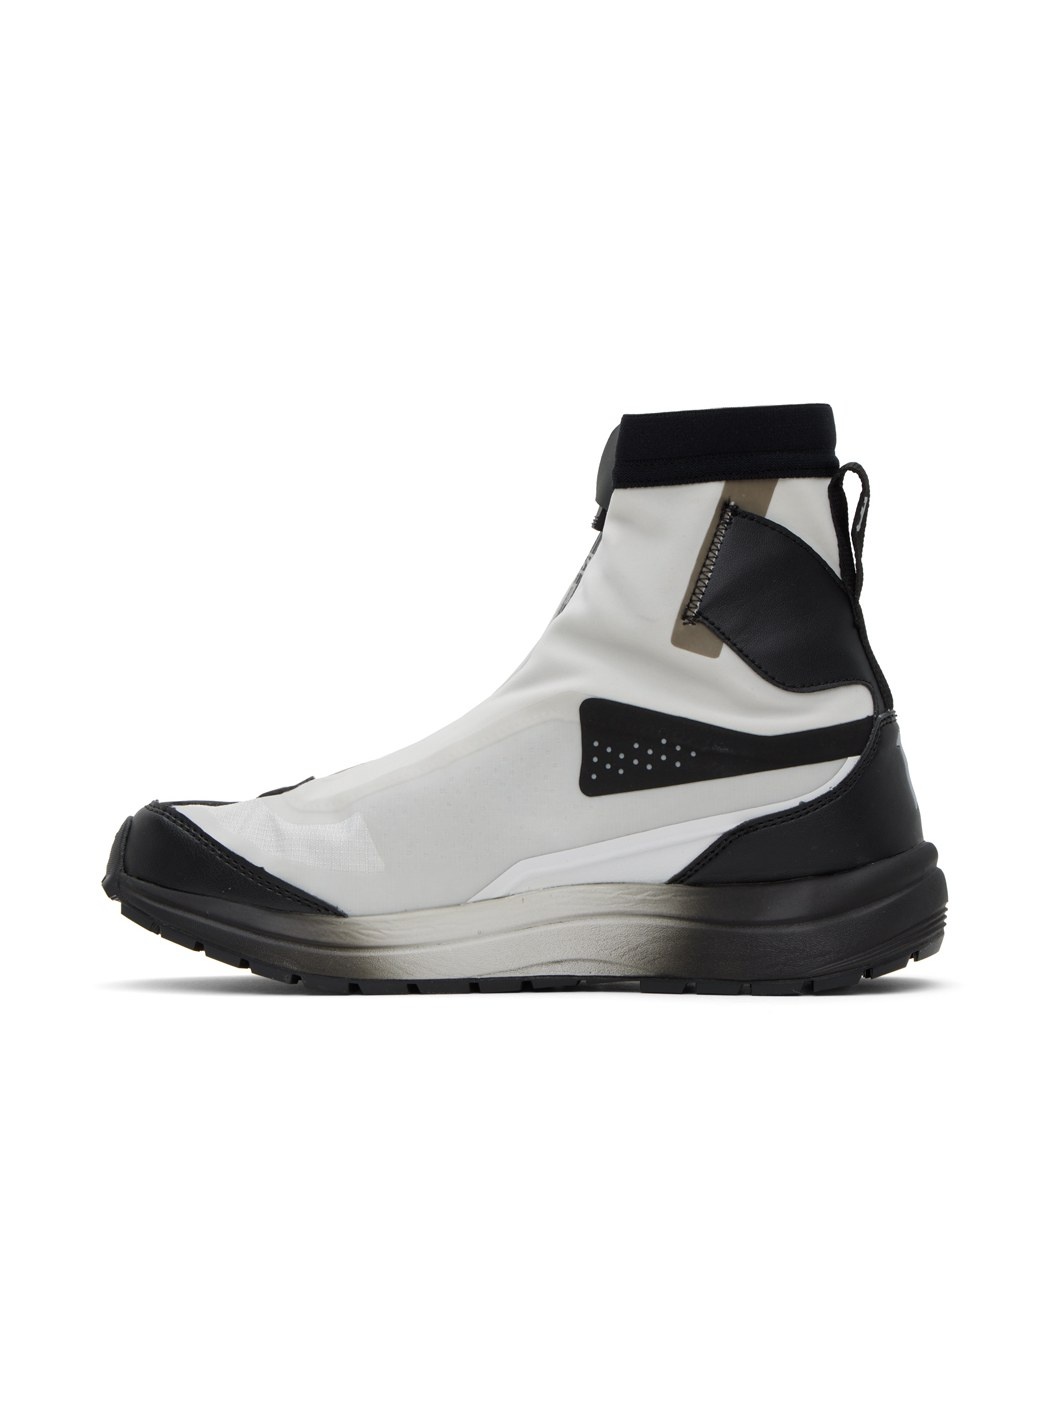 White & Black Salomon Edition Bamba 2 High GTX Sneakers - 3